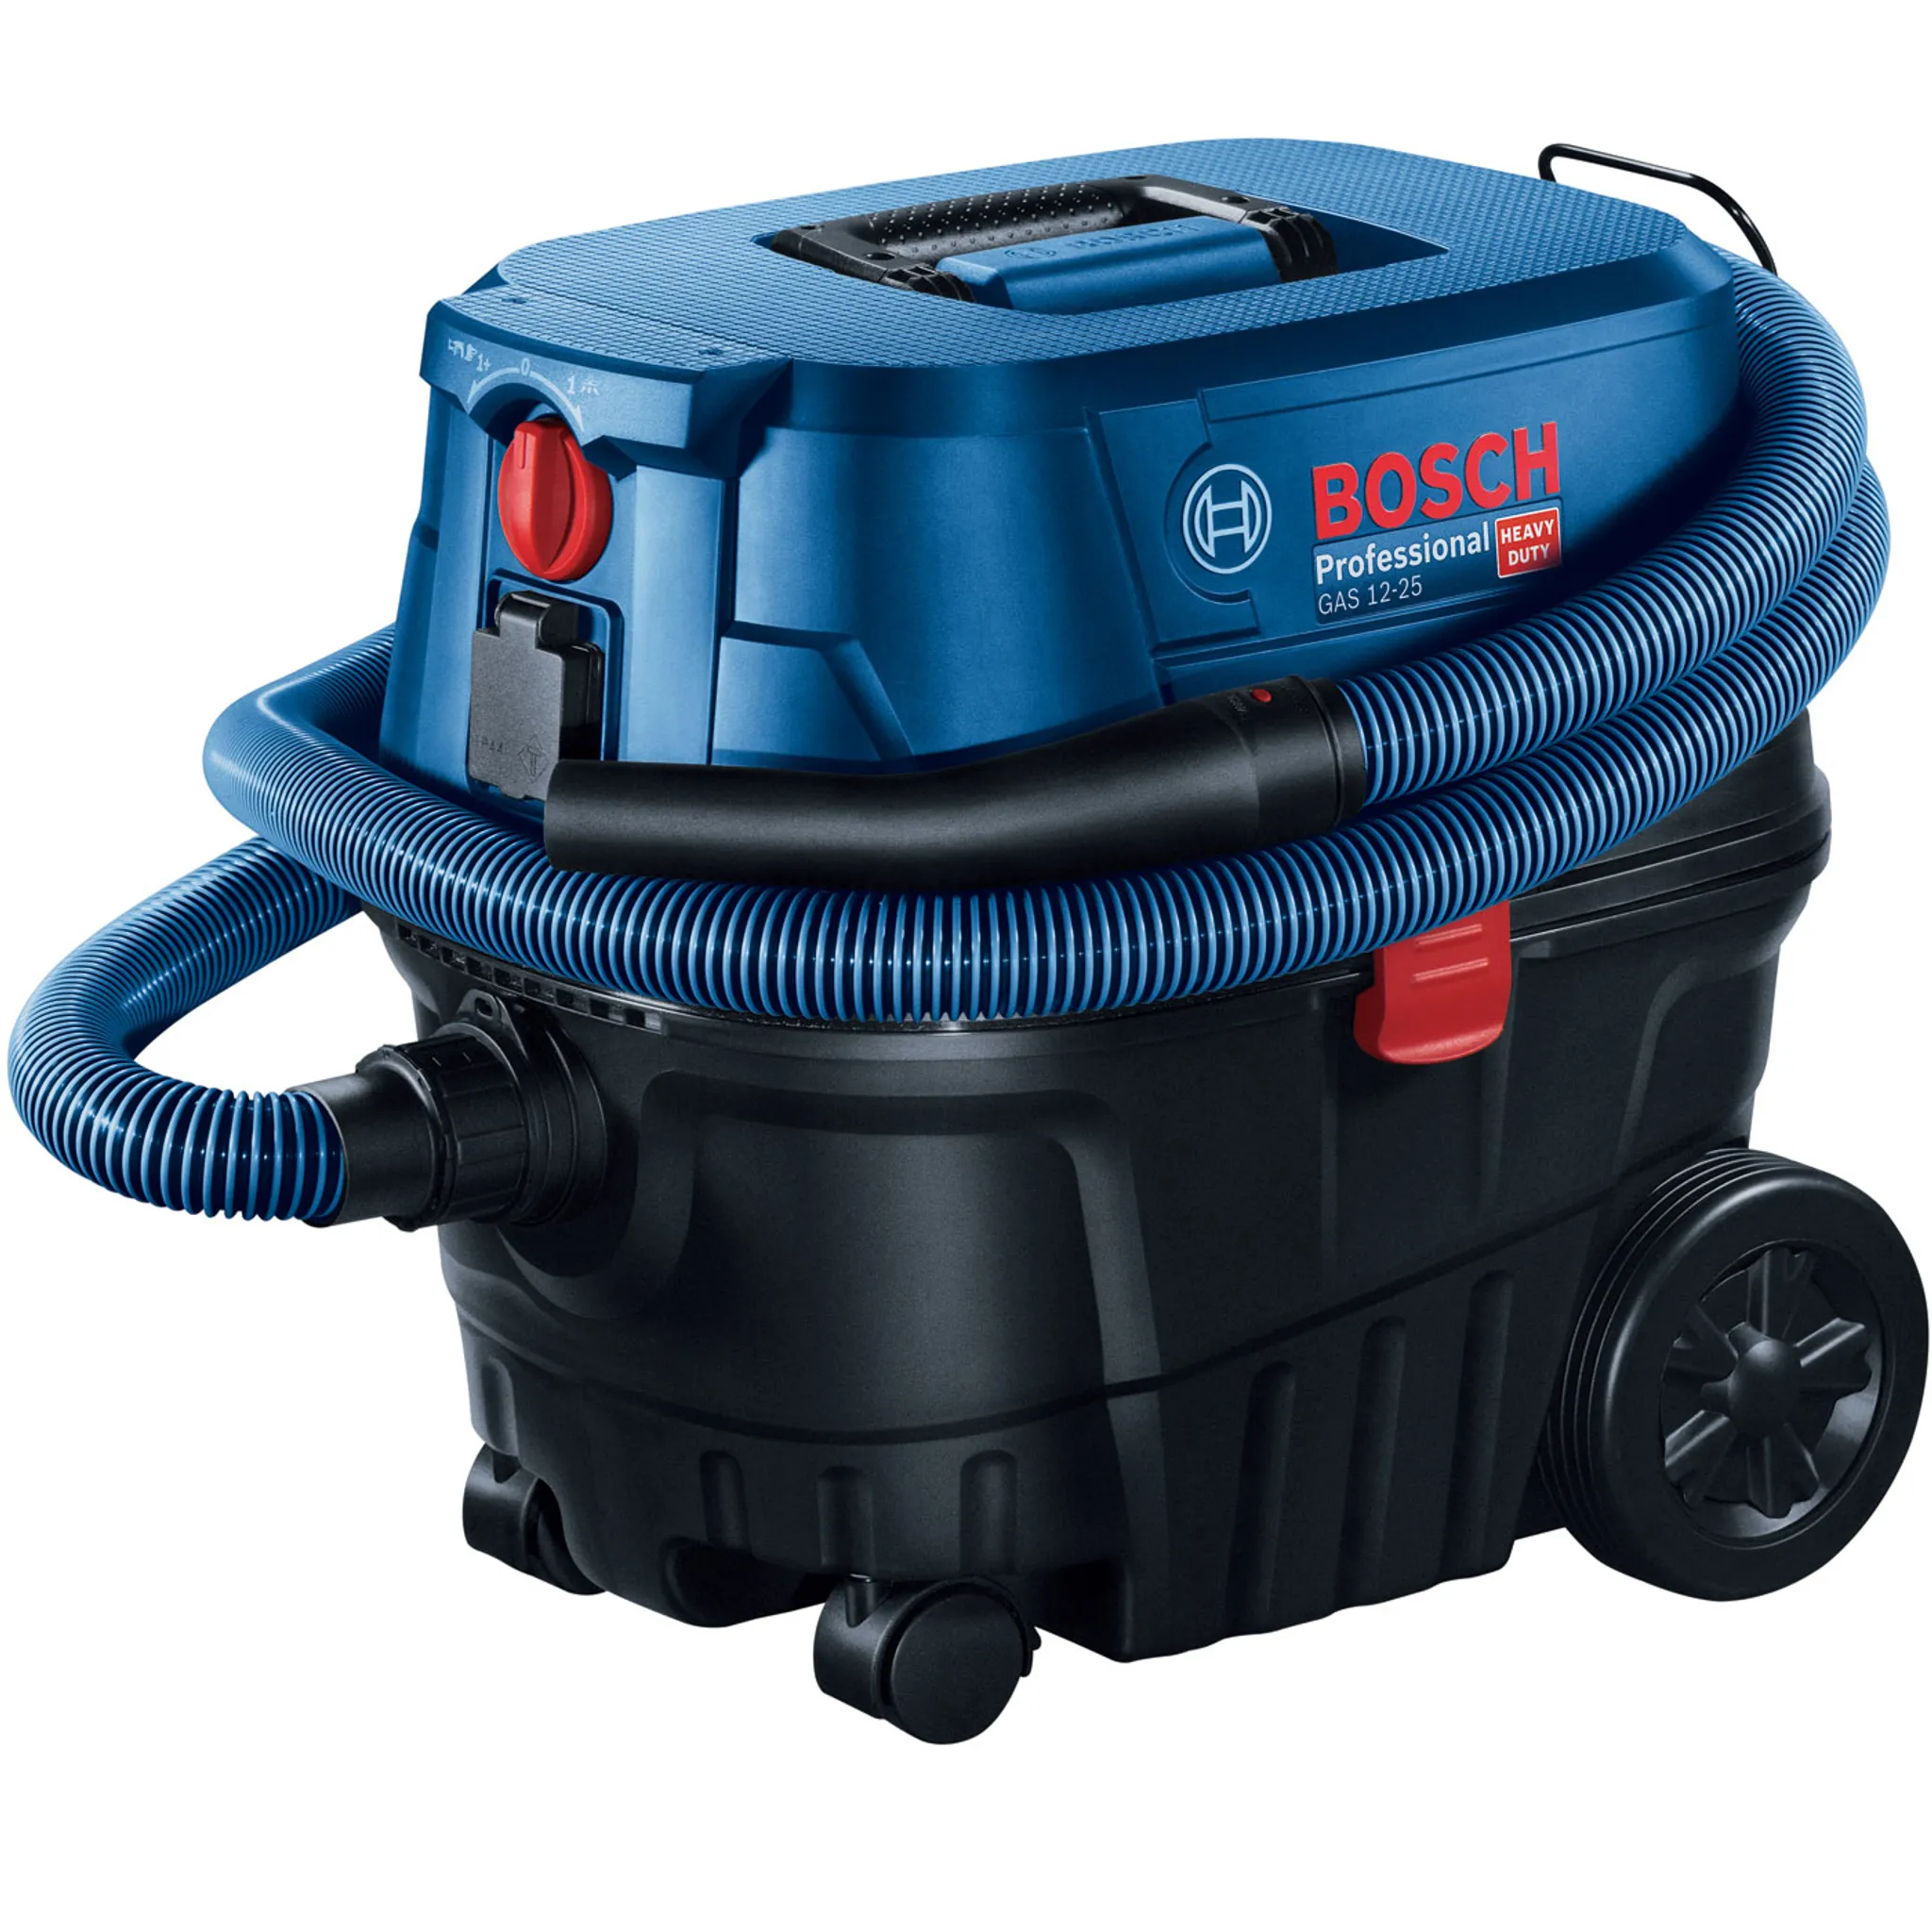 Bosch Professional GAS 12-25 PL